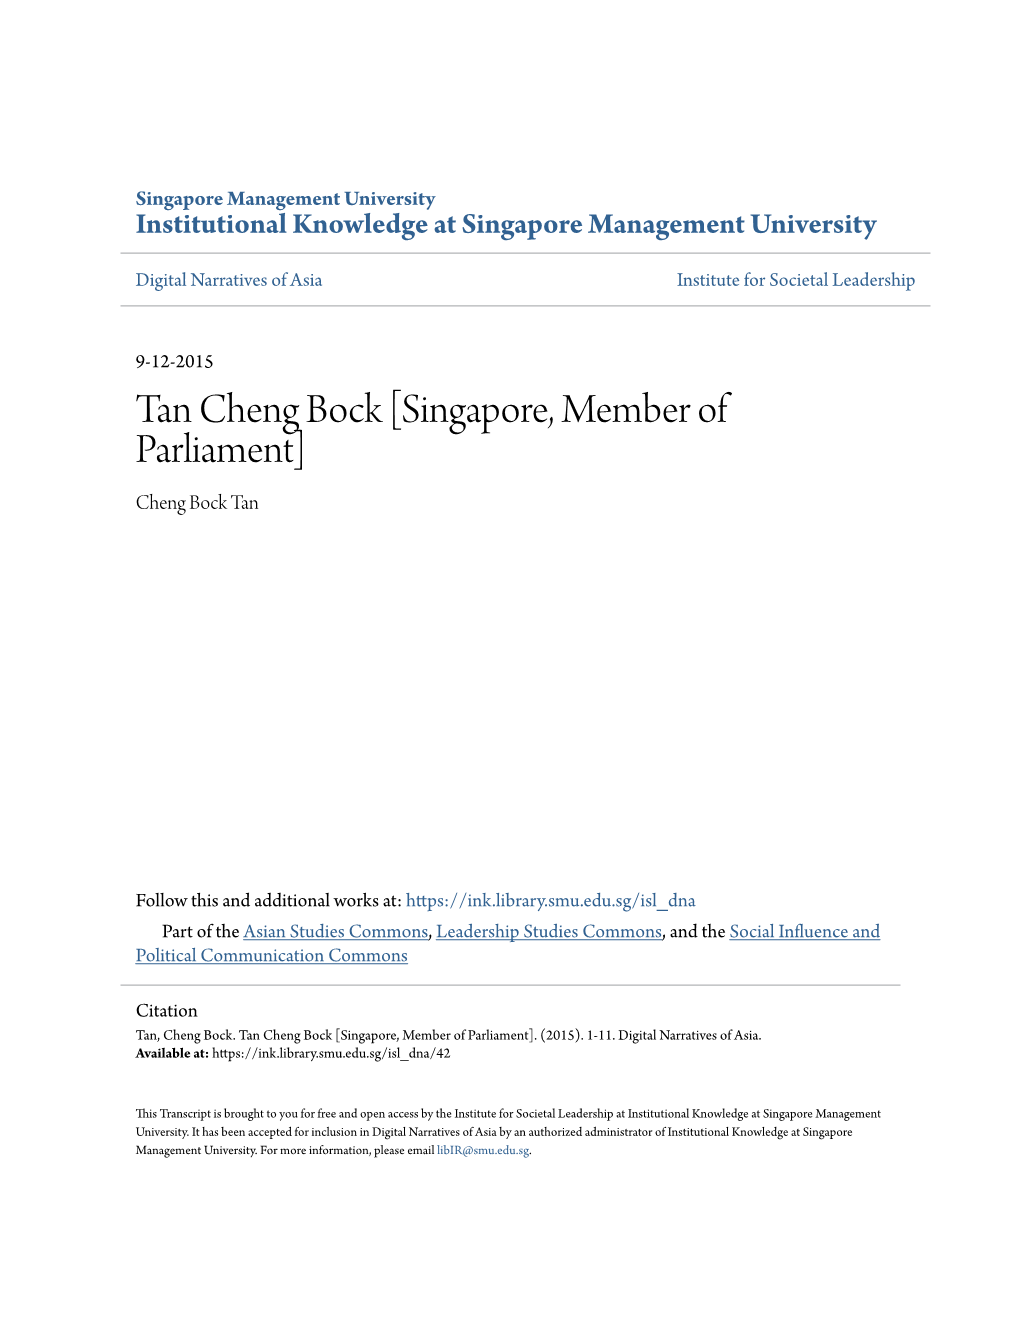 Tan Cheng Bock [Singapore, Member of Parliament] Cheng Bock Tan